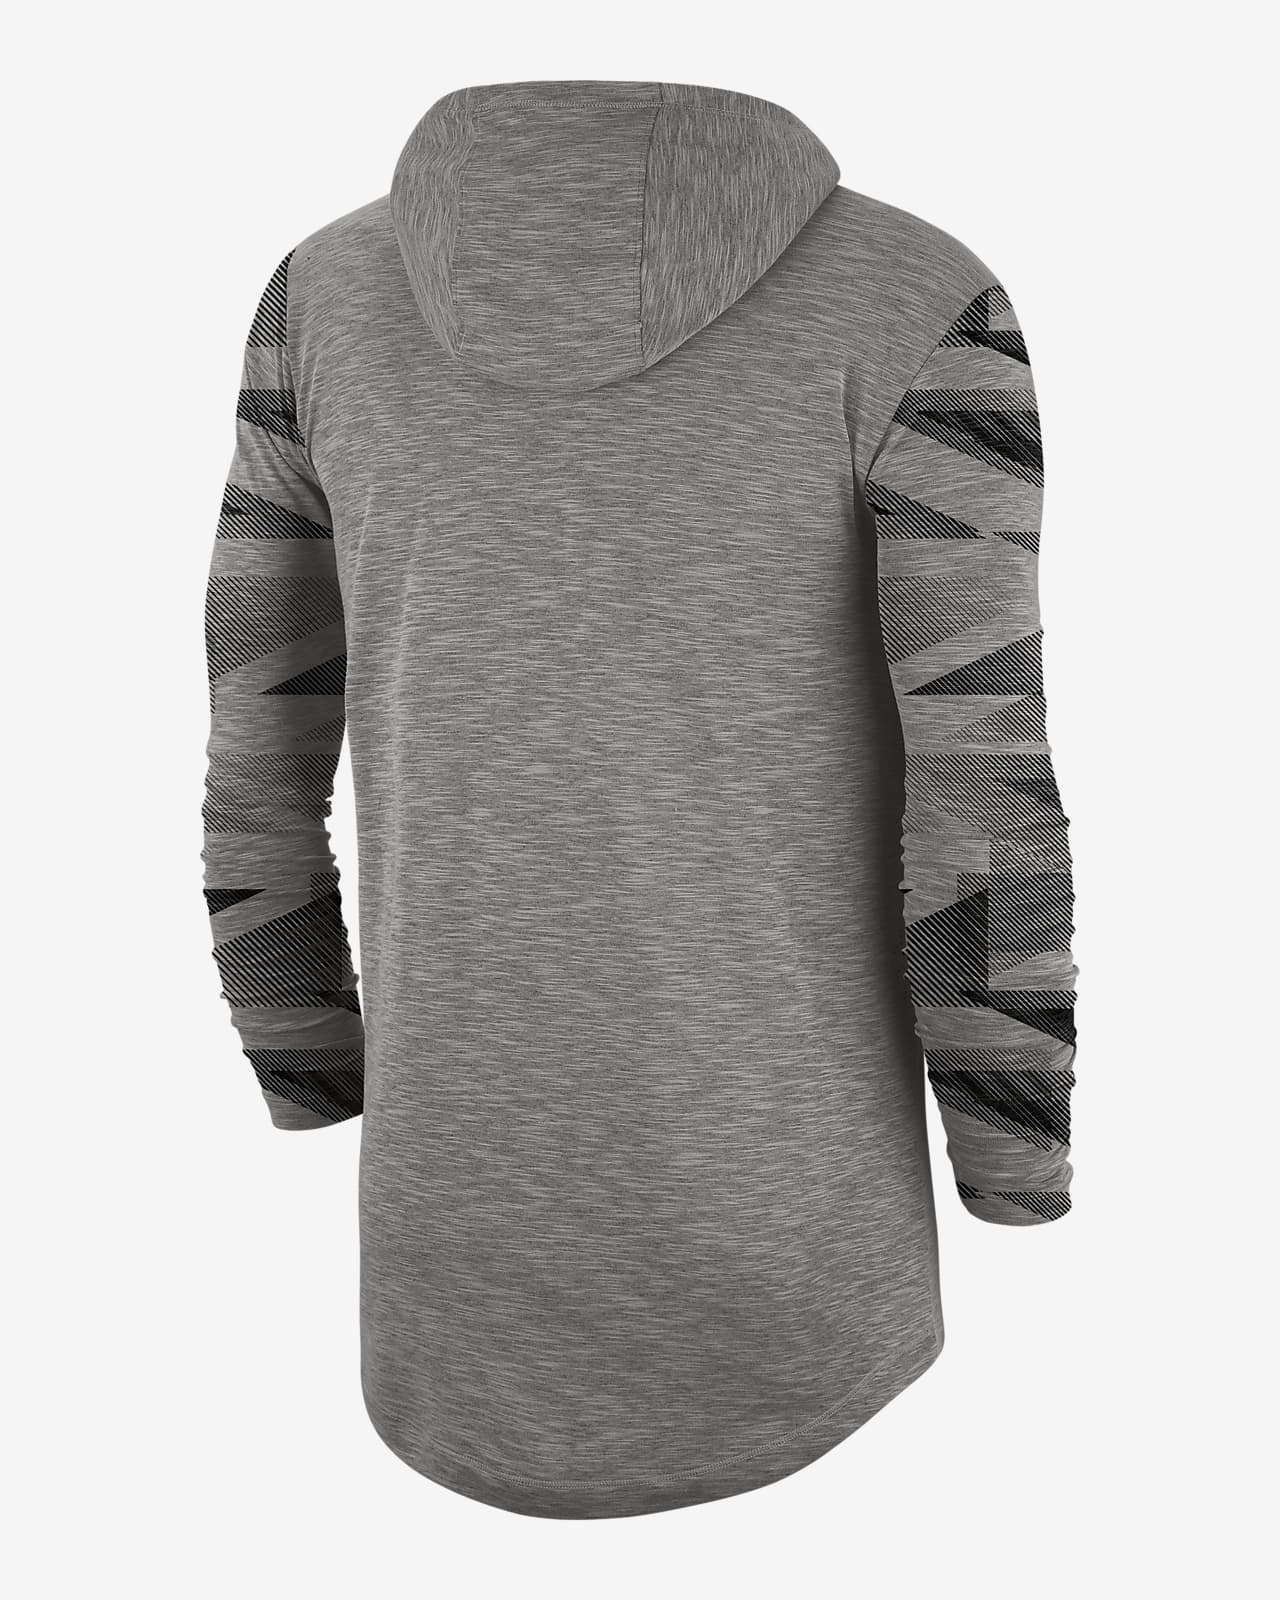 Men's Long-Sleeve Hooded T-Shirt. Nike.com